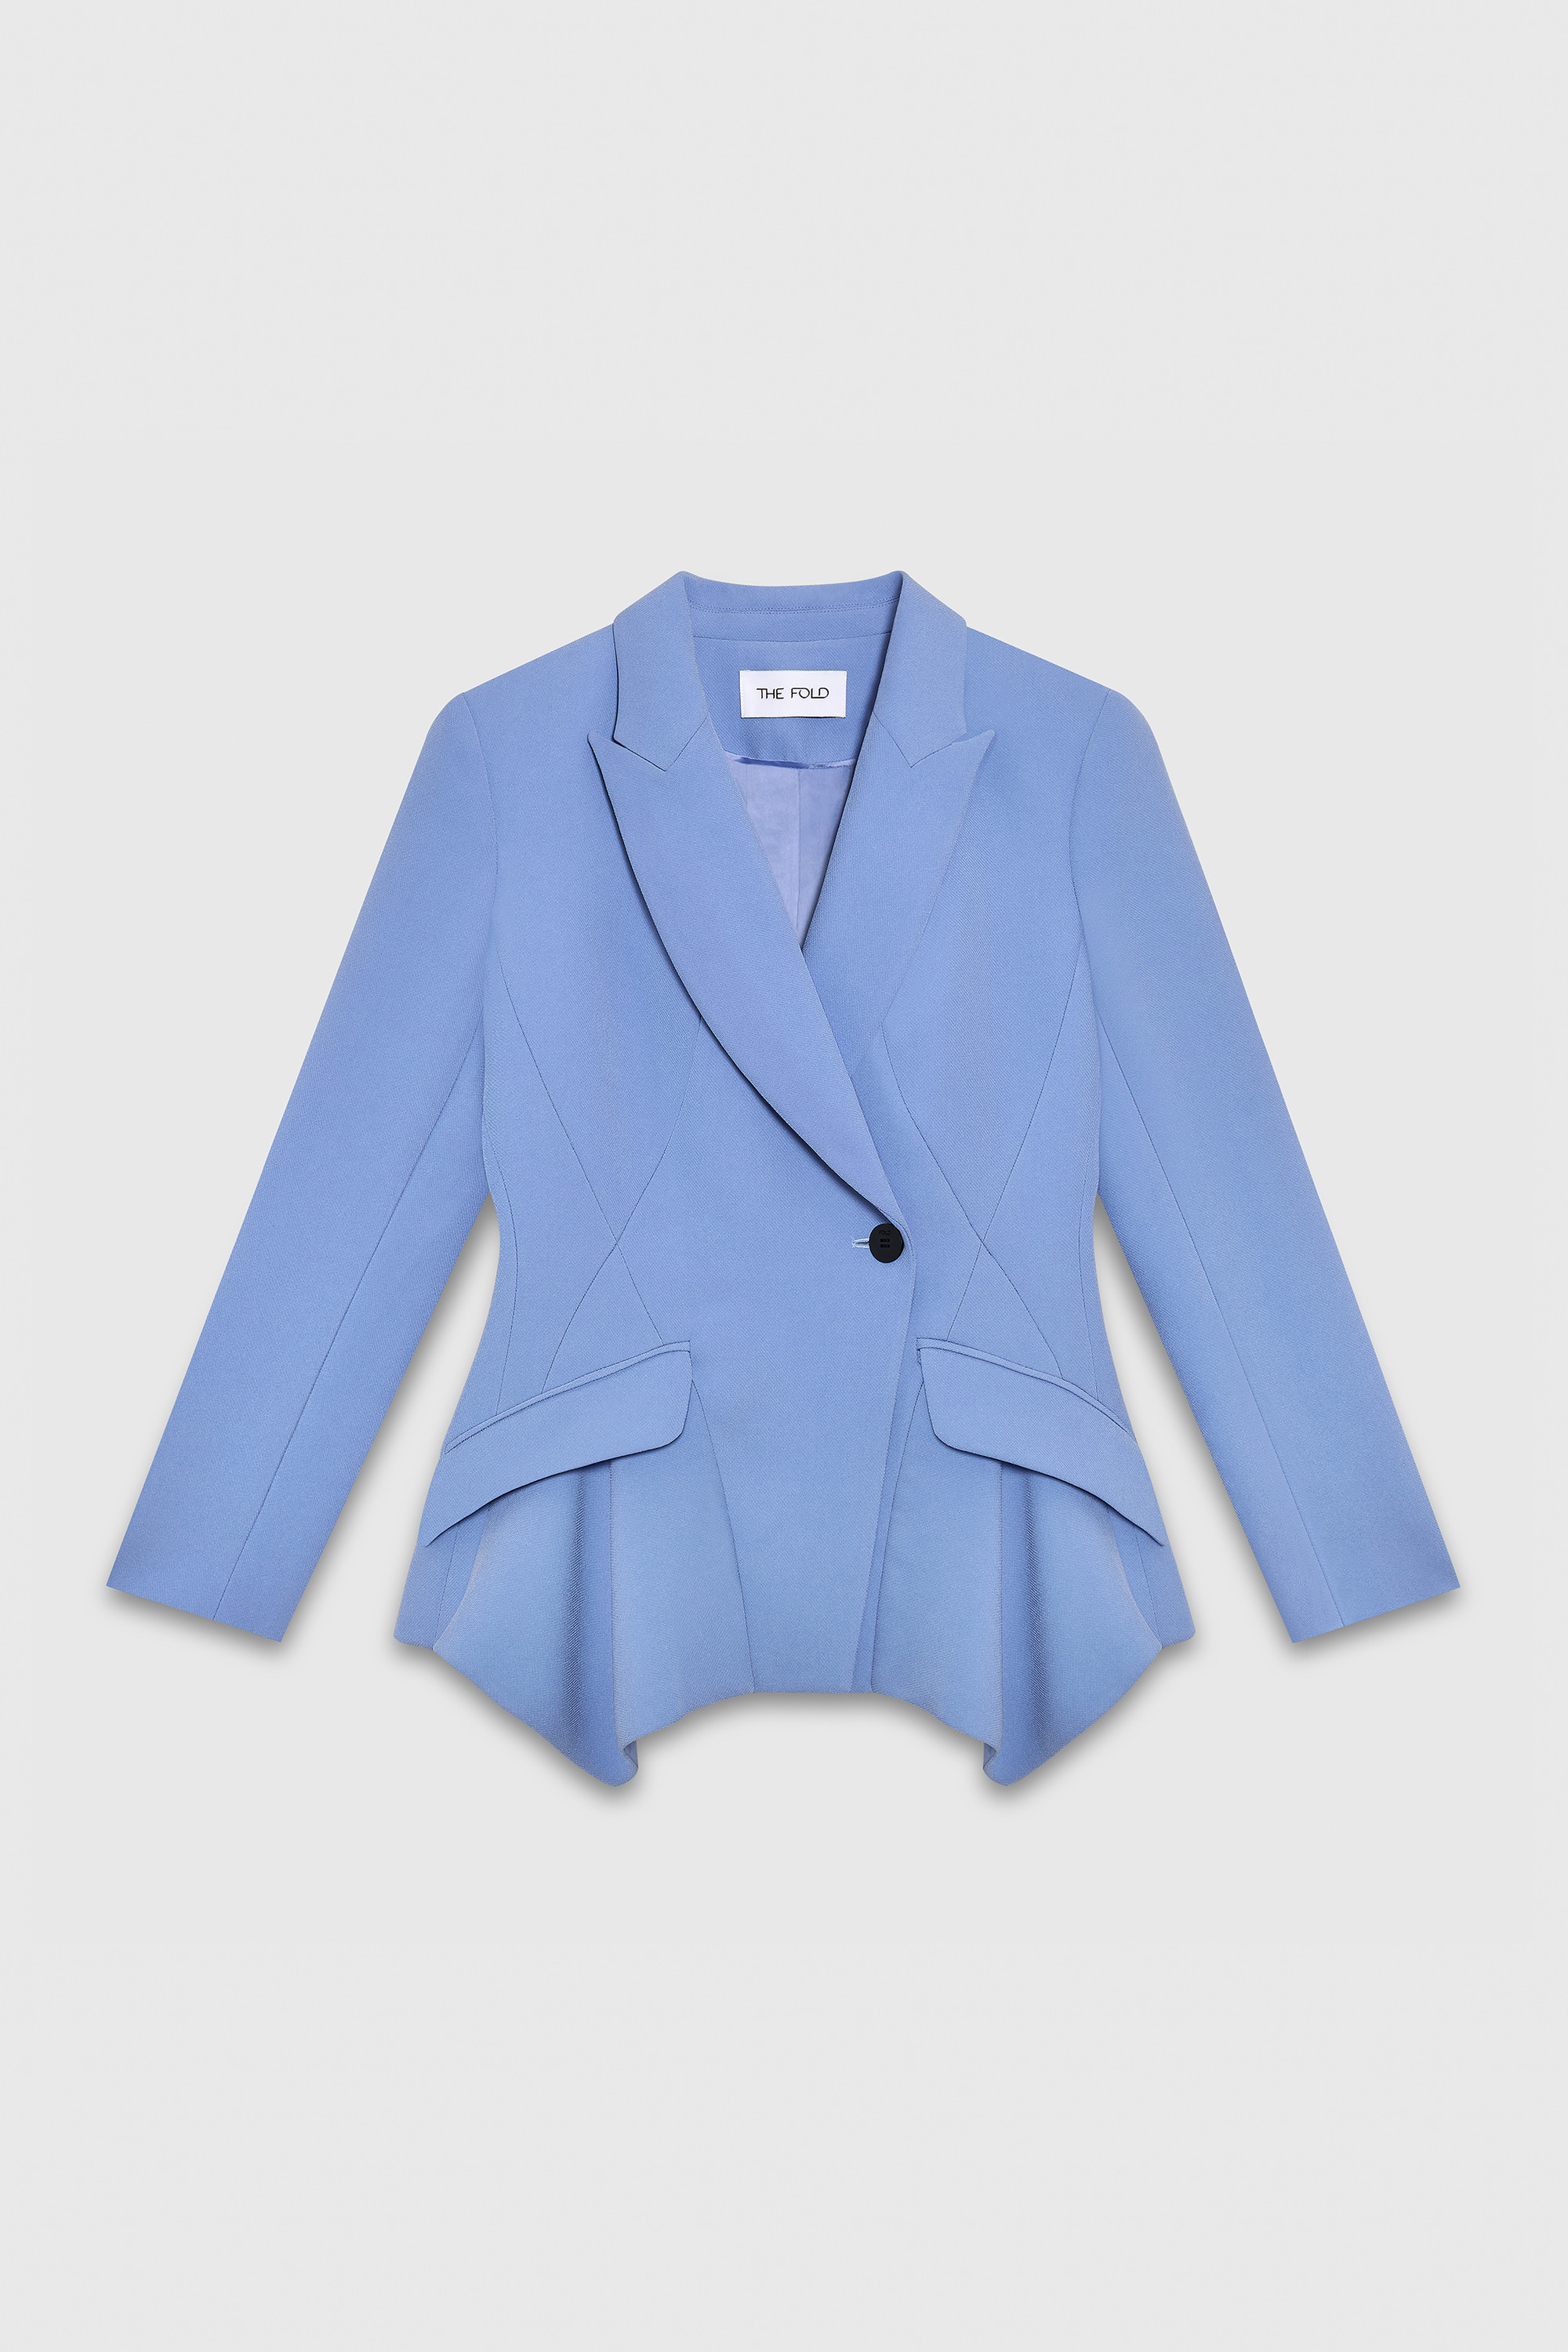 Merida Jacket Light Cornflower Blue Crepe - Welcome to the Fold LTD